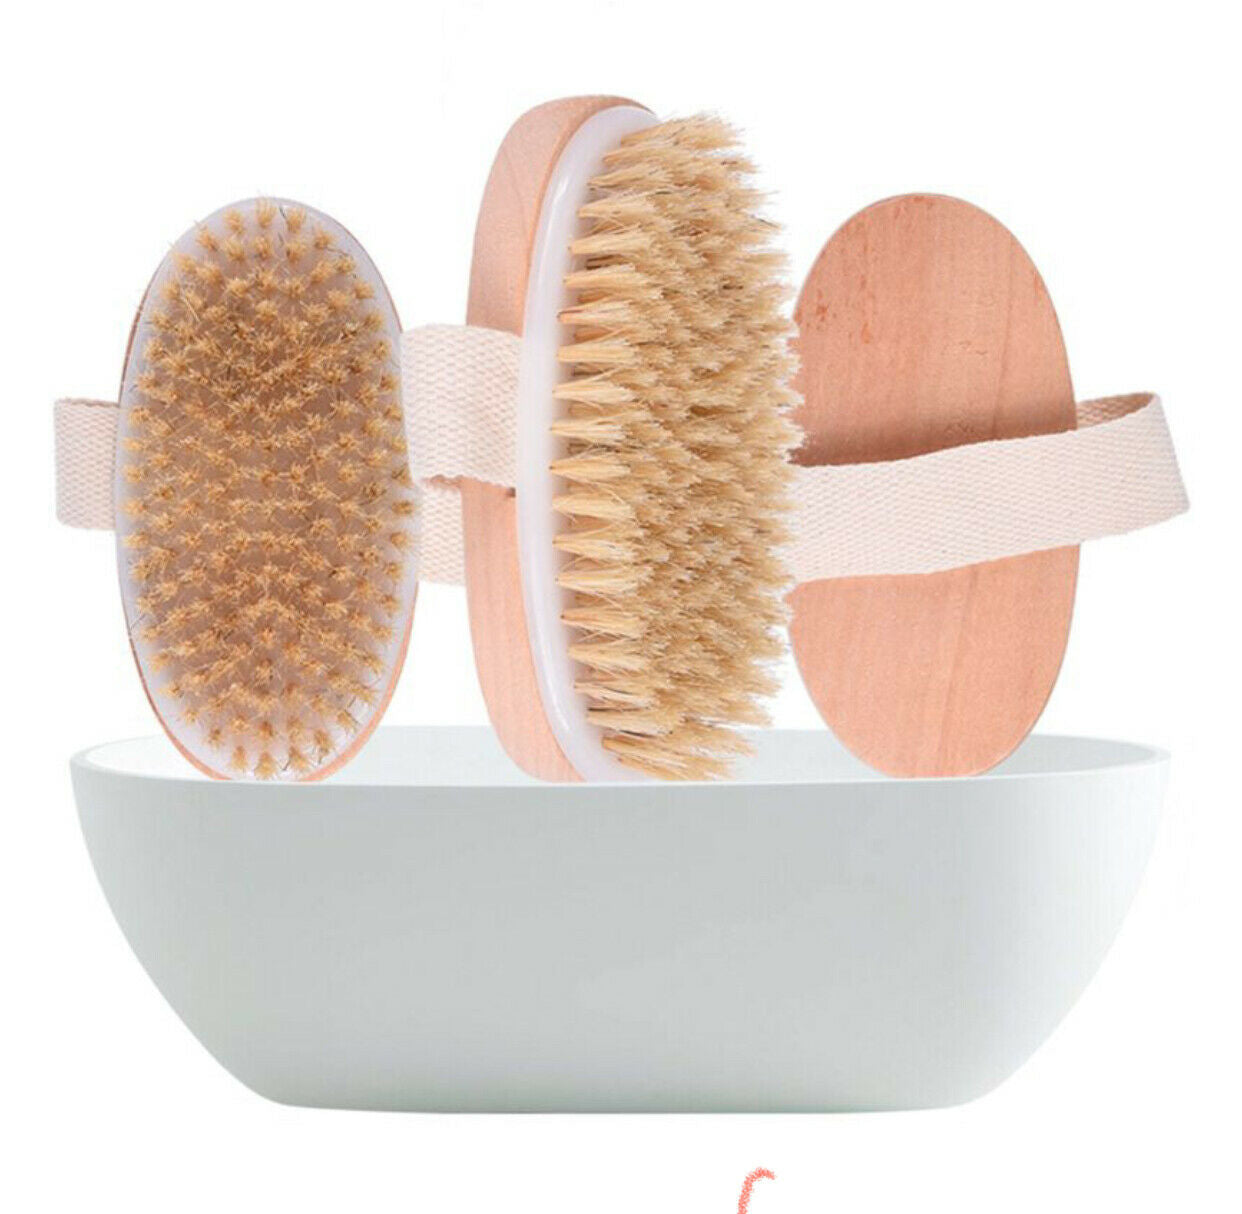 Dry Body Brush Wooden Oval Shower Bath Brushes Exfoliating Massage Cellulite Tre